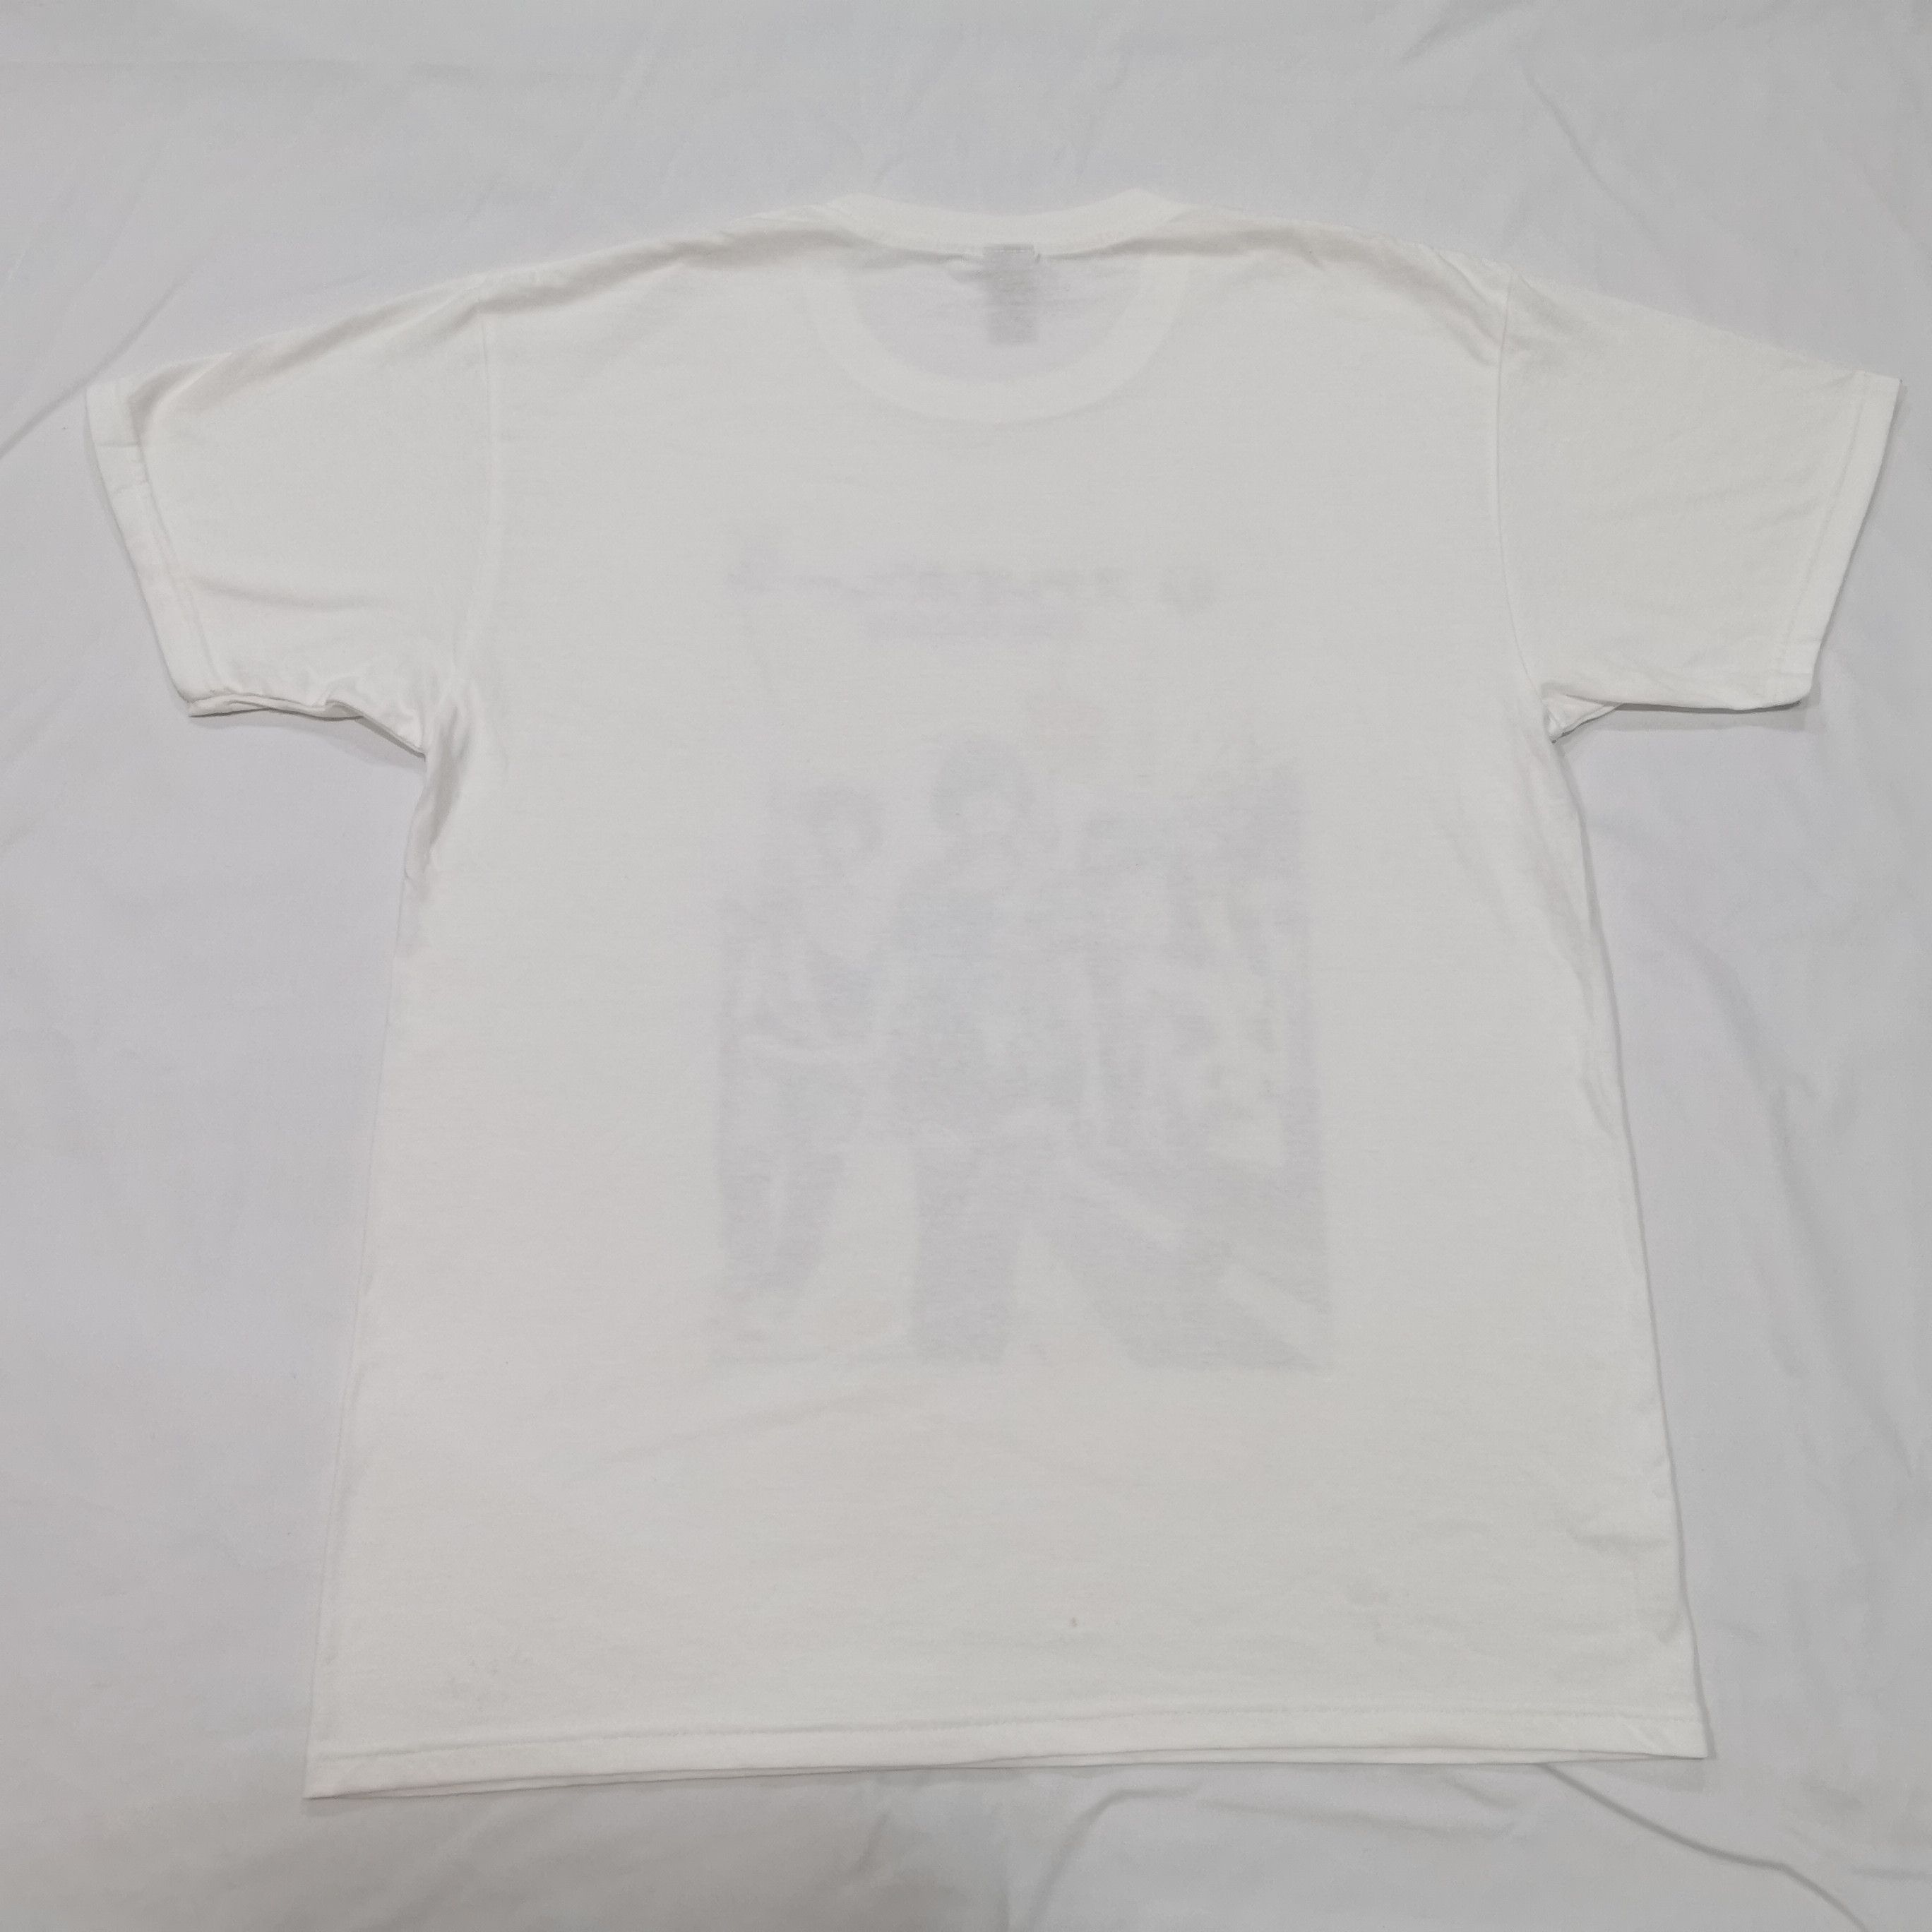 Stereopony Over The Border Japanese Band Custom Print Tshirt - 3